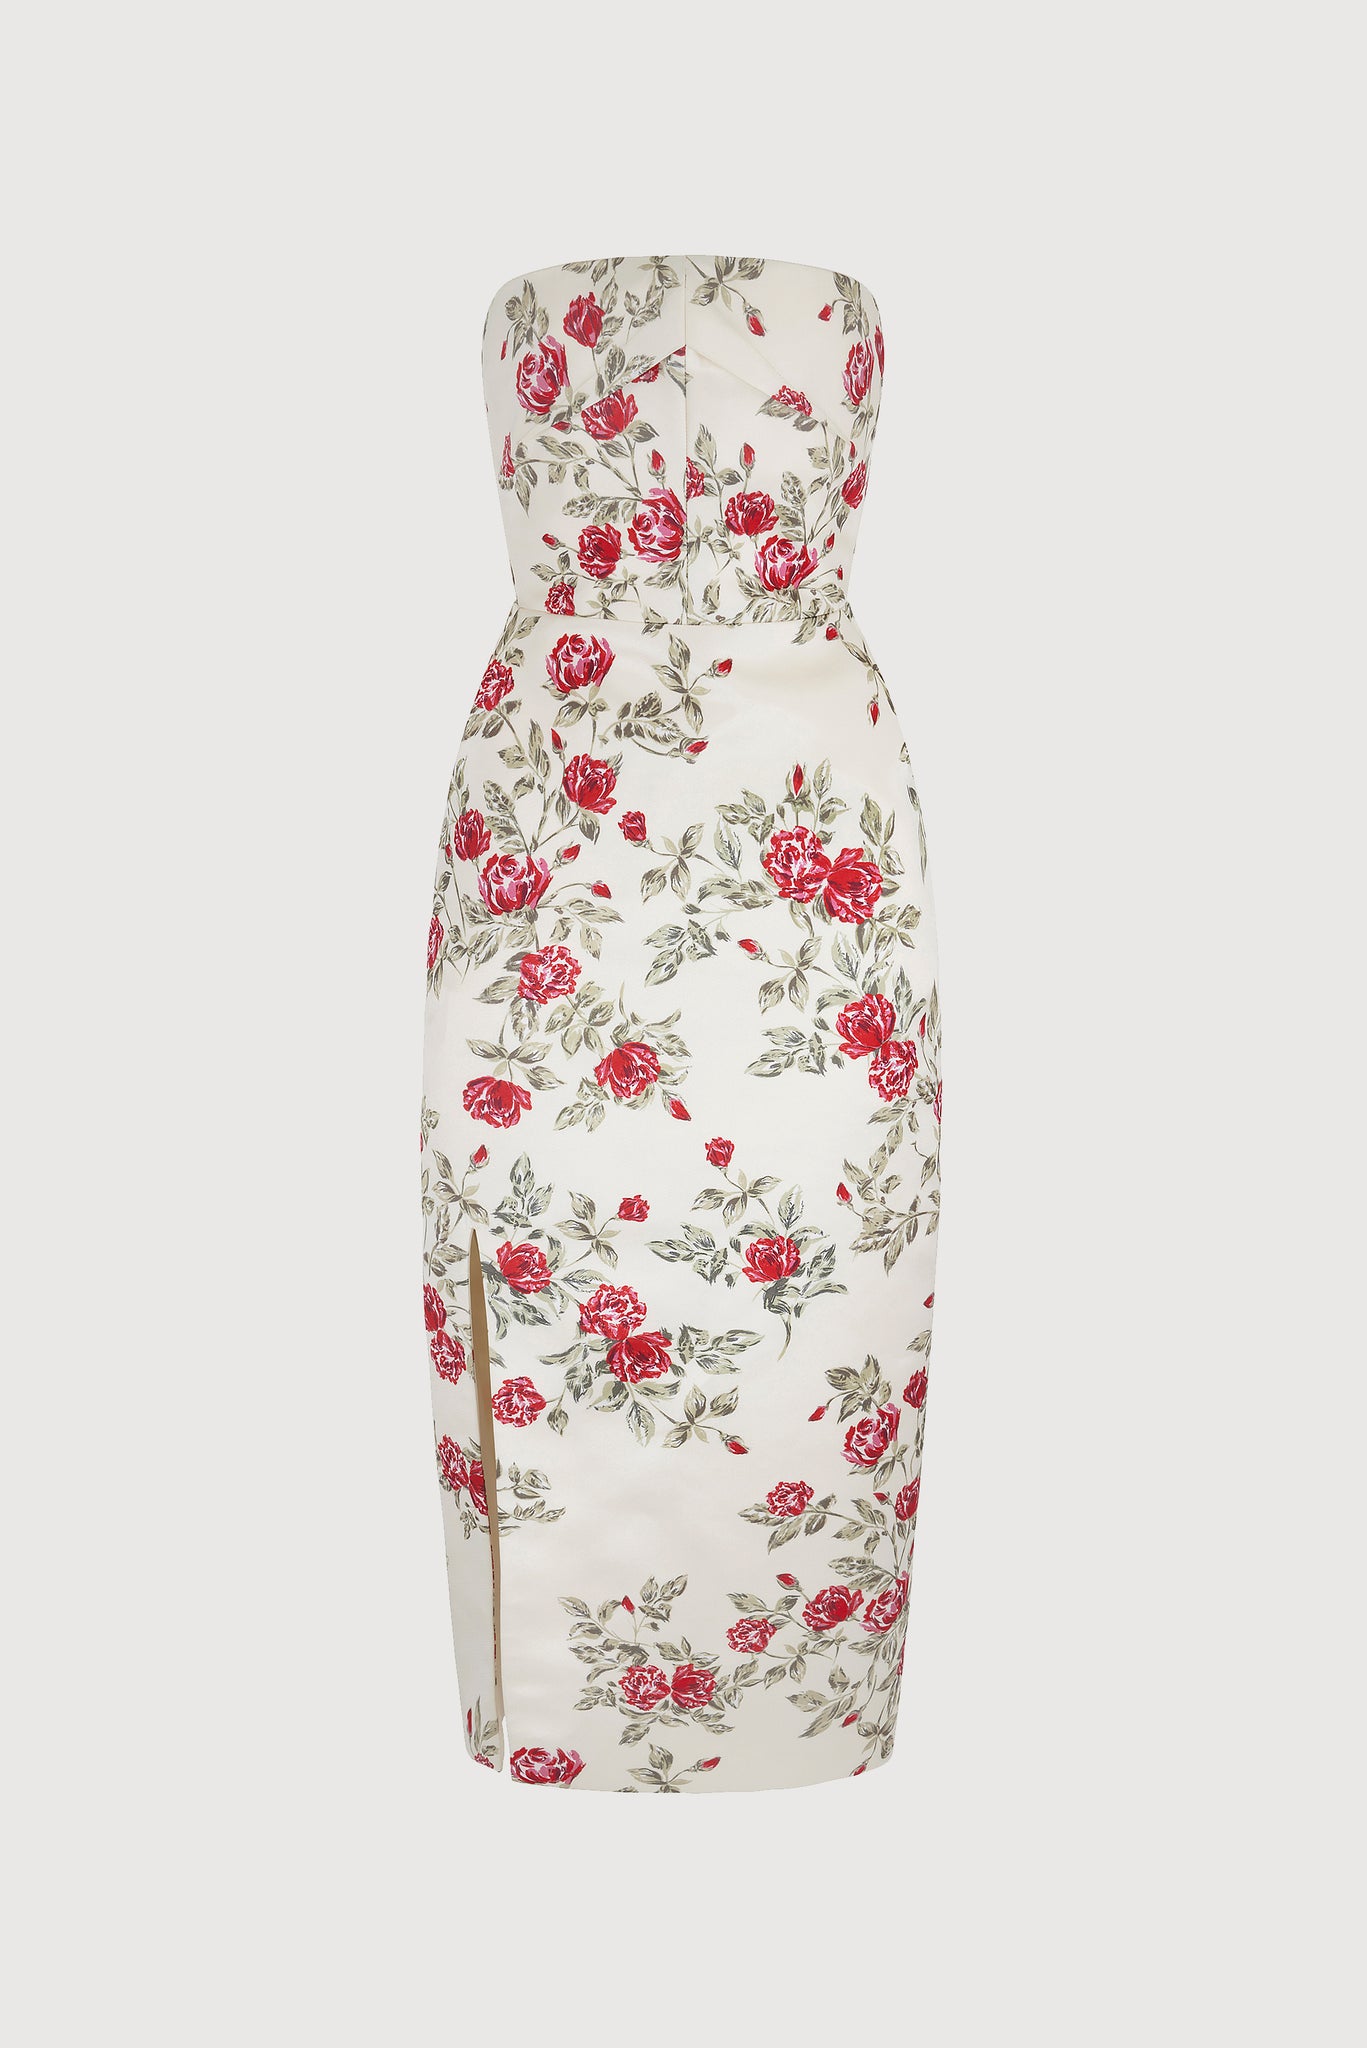 Pola Red Floral Printed Italian Duchess Satin Strapless Dress | Emilia Wickstead